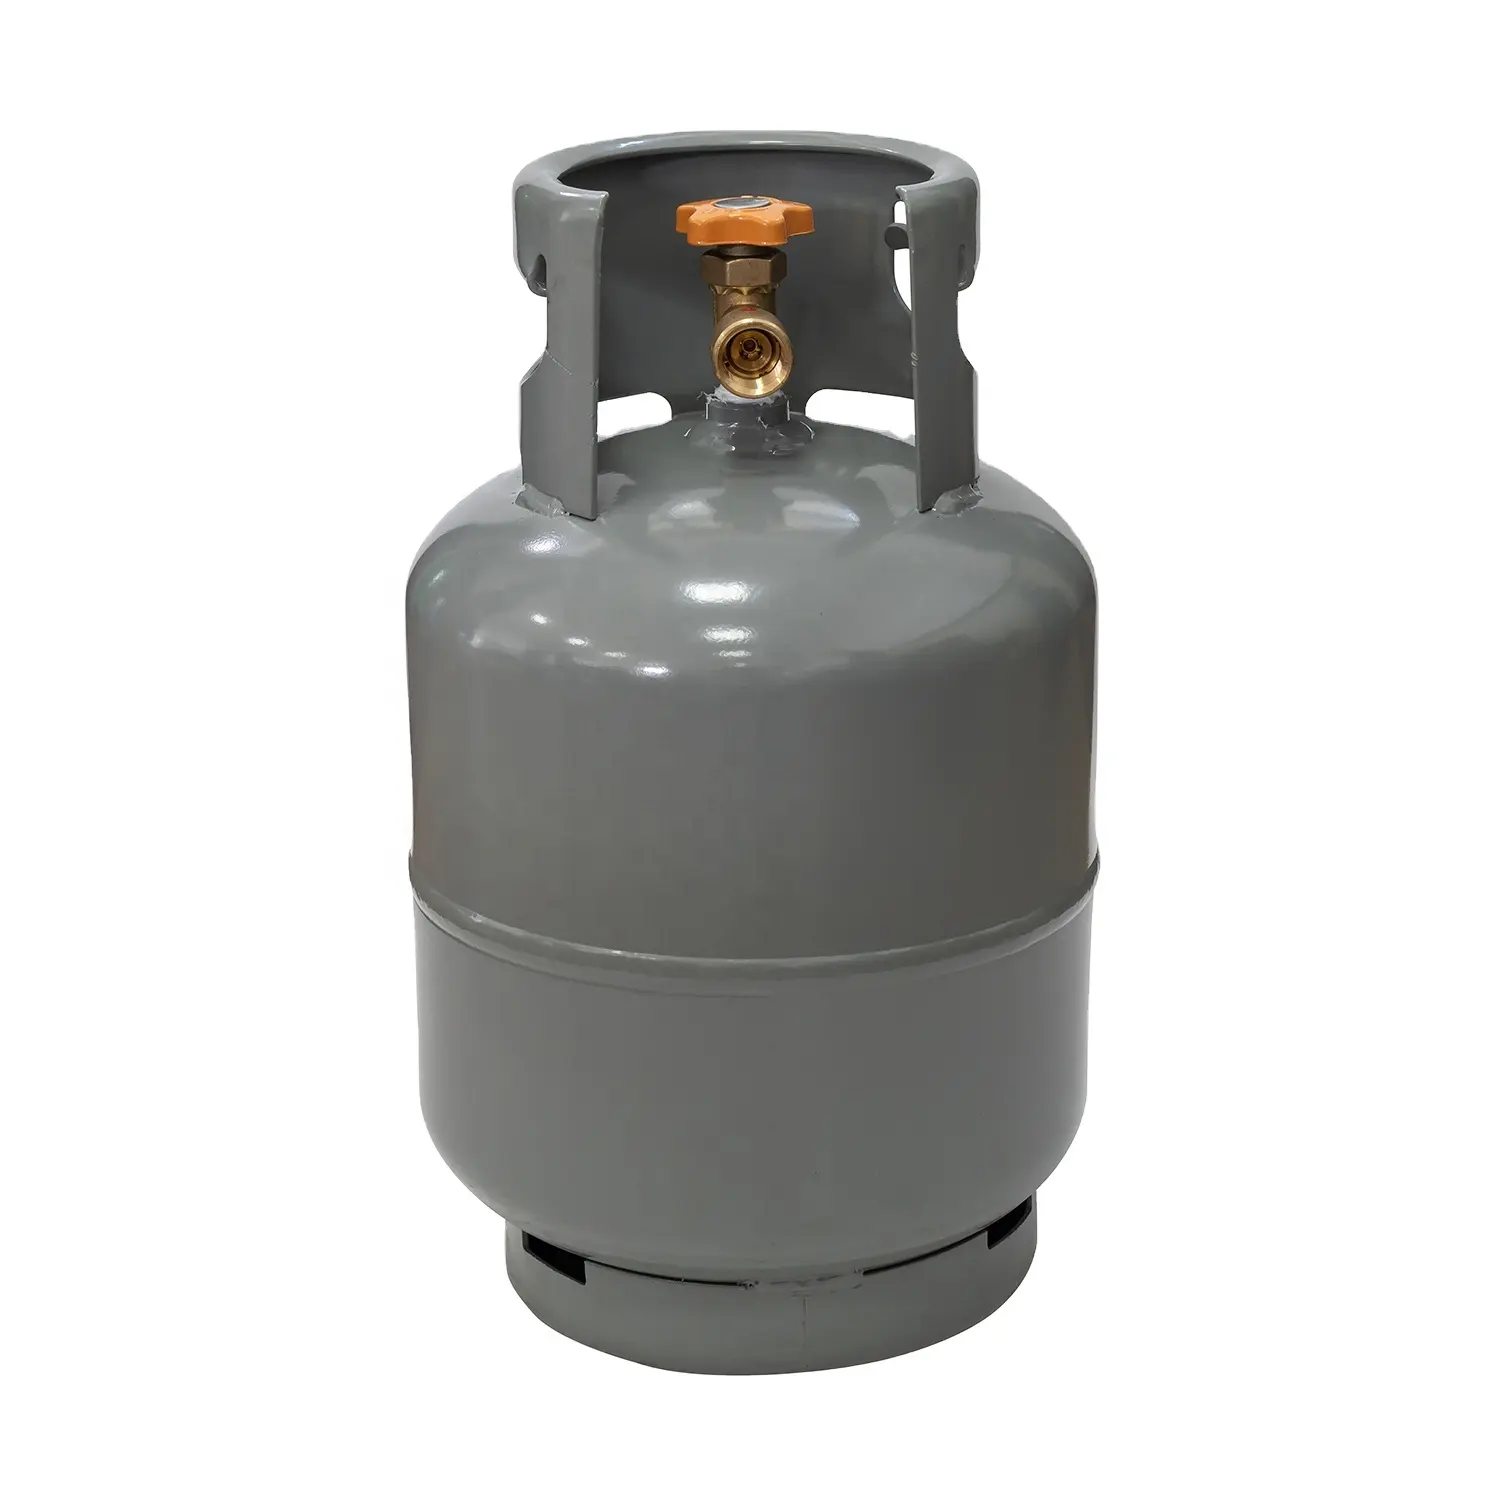 Botol Silinder Gas LPG 5Kg untuk Memasak/Berkemah